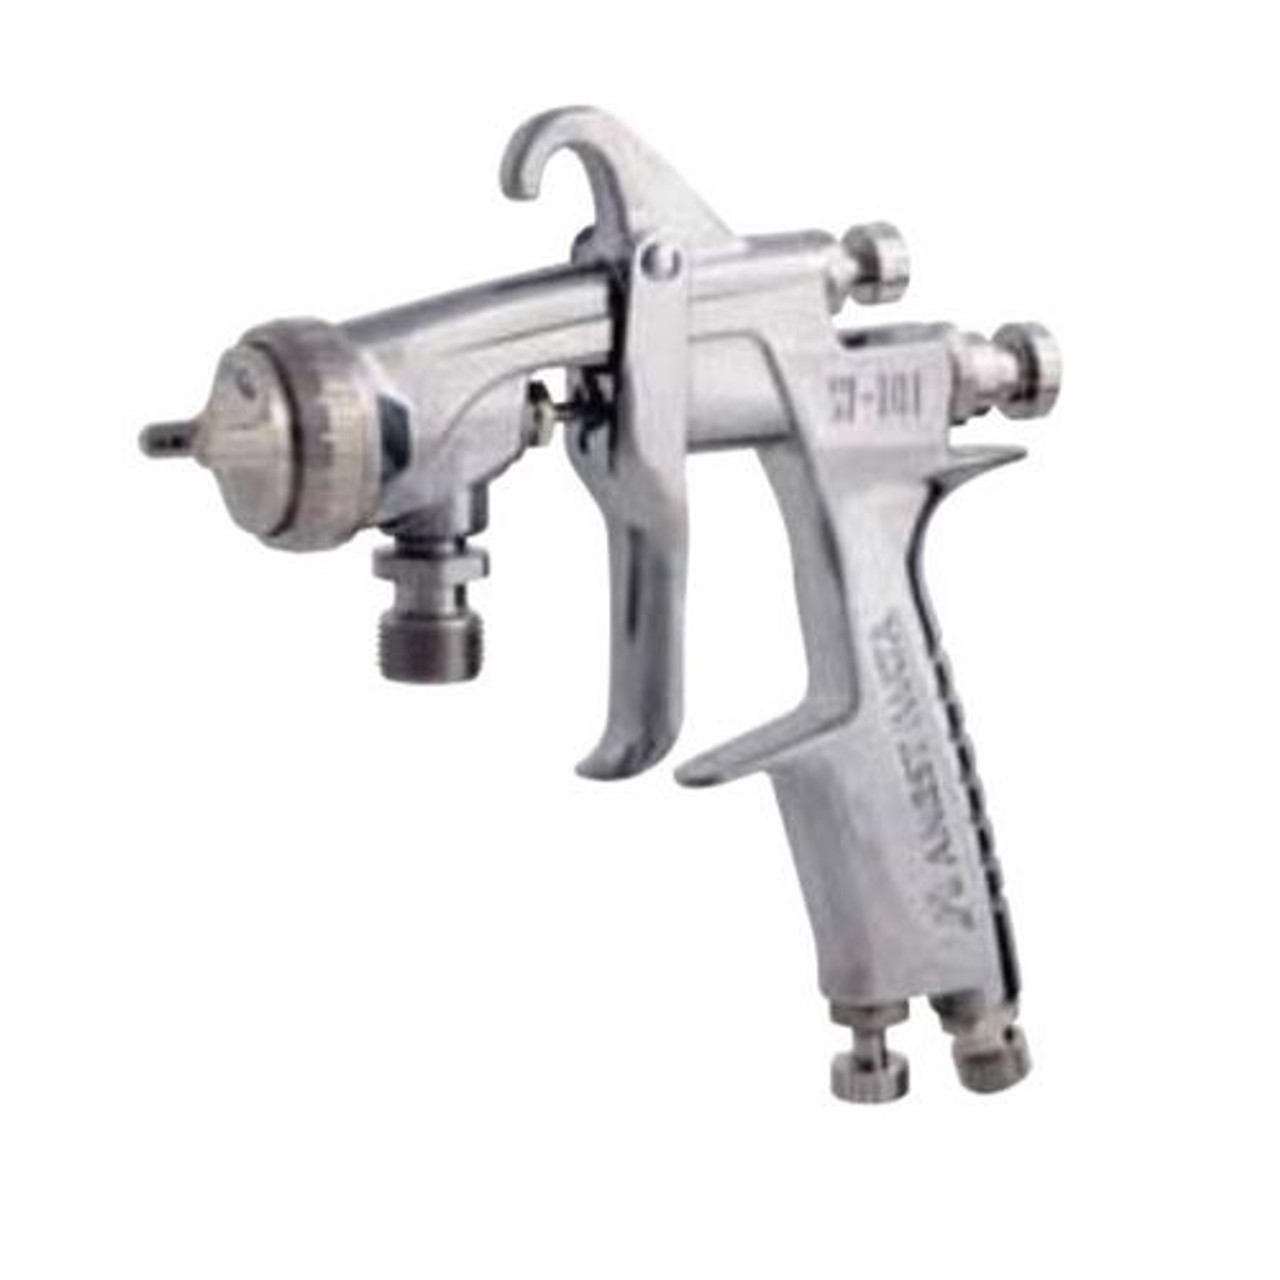 ANEST IWATA 4403B Pressure Spray Gun, 1 mm Nozzle, 35 psi